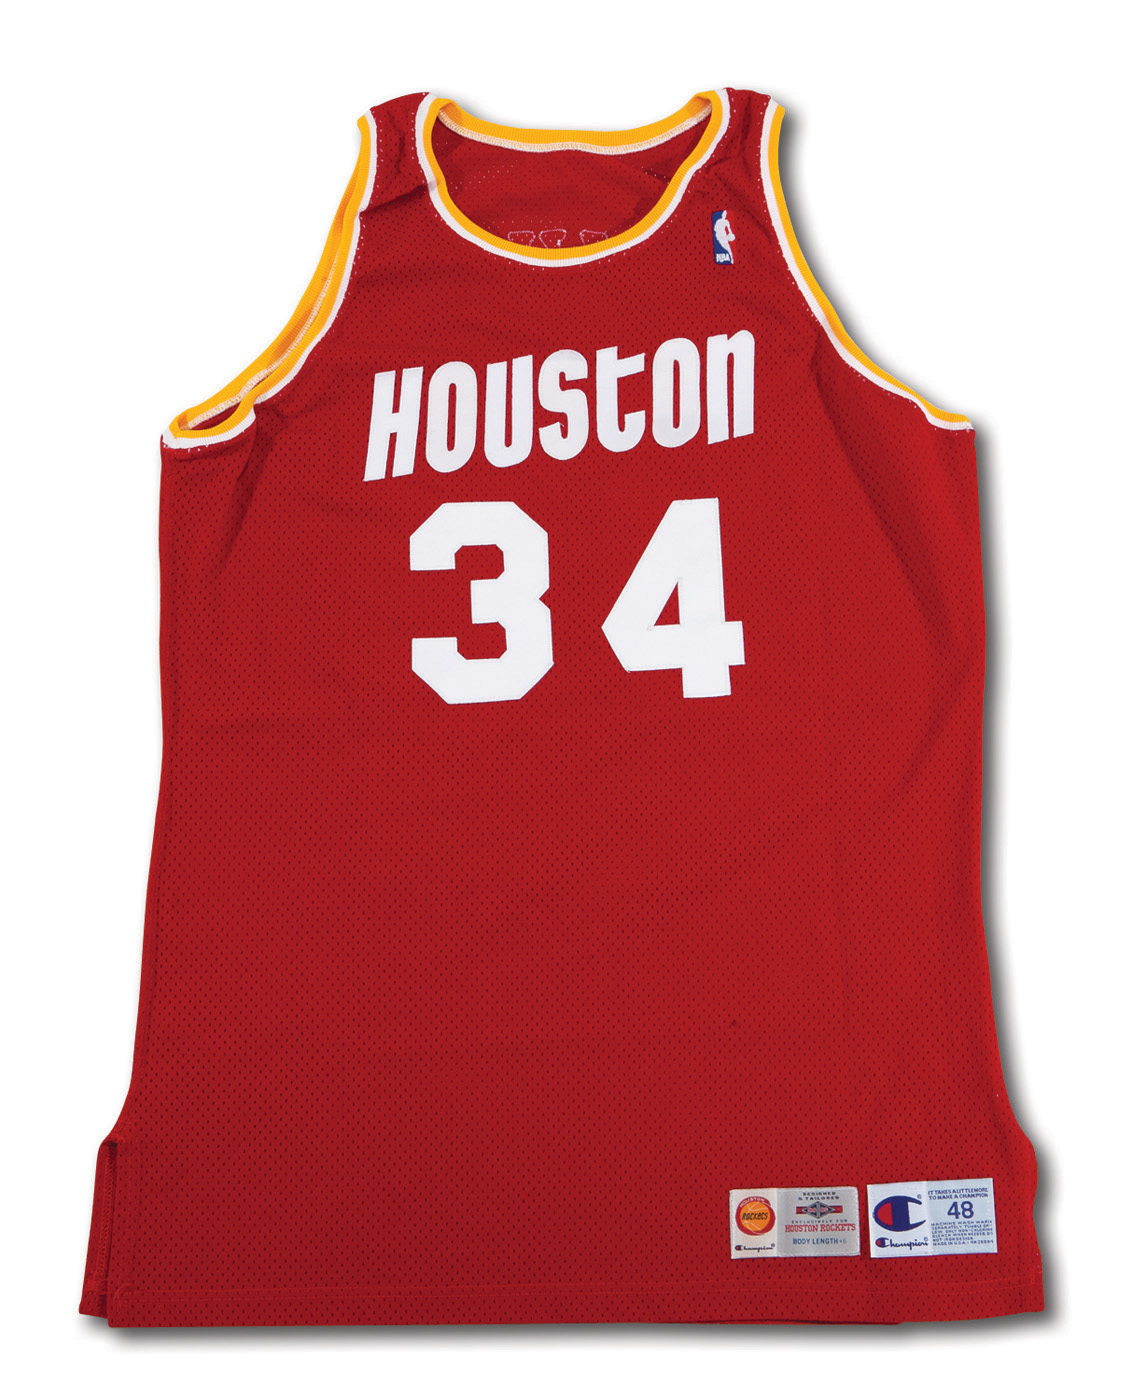 1994-95 Hakeem Olajuwon Game Worn Houston Rockets Jersey with